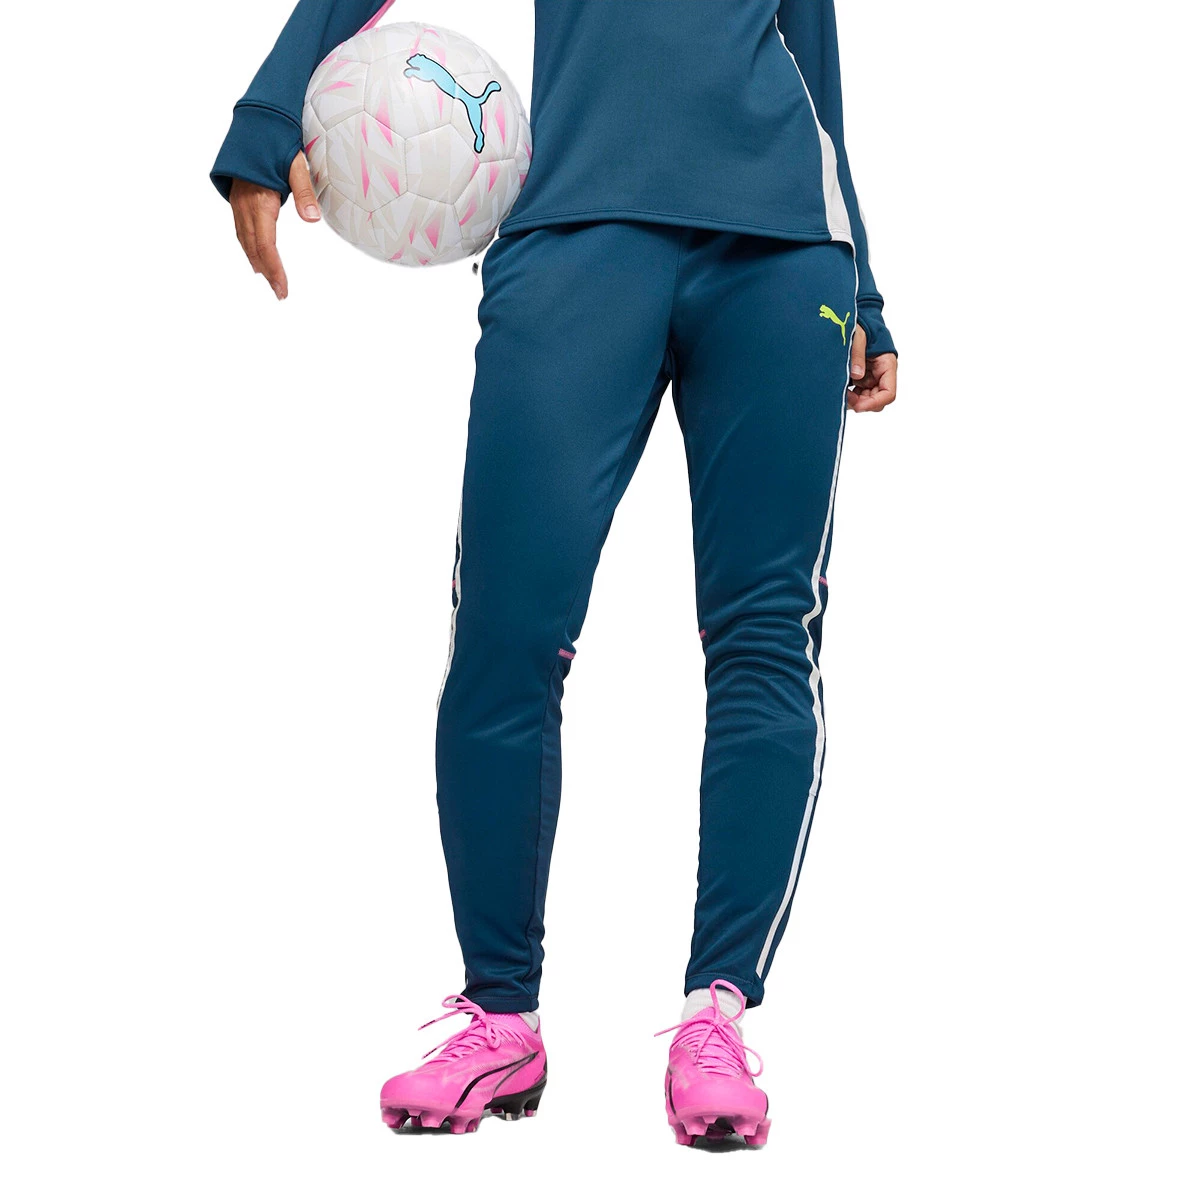 Chándal de fútbol individualBLAZE para mujer, blue